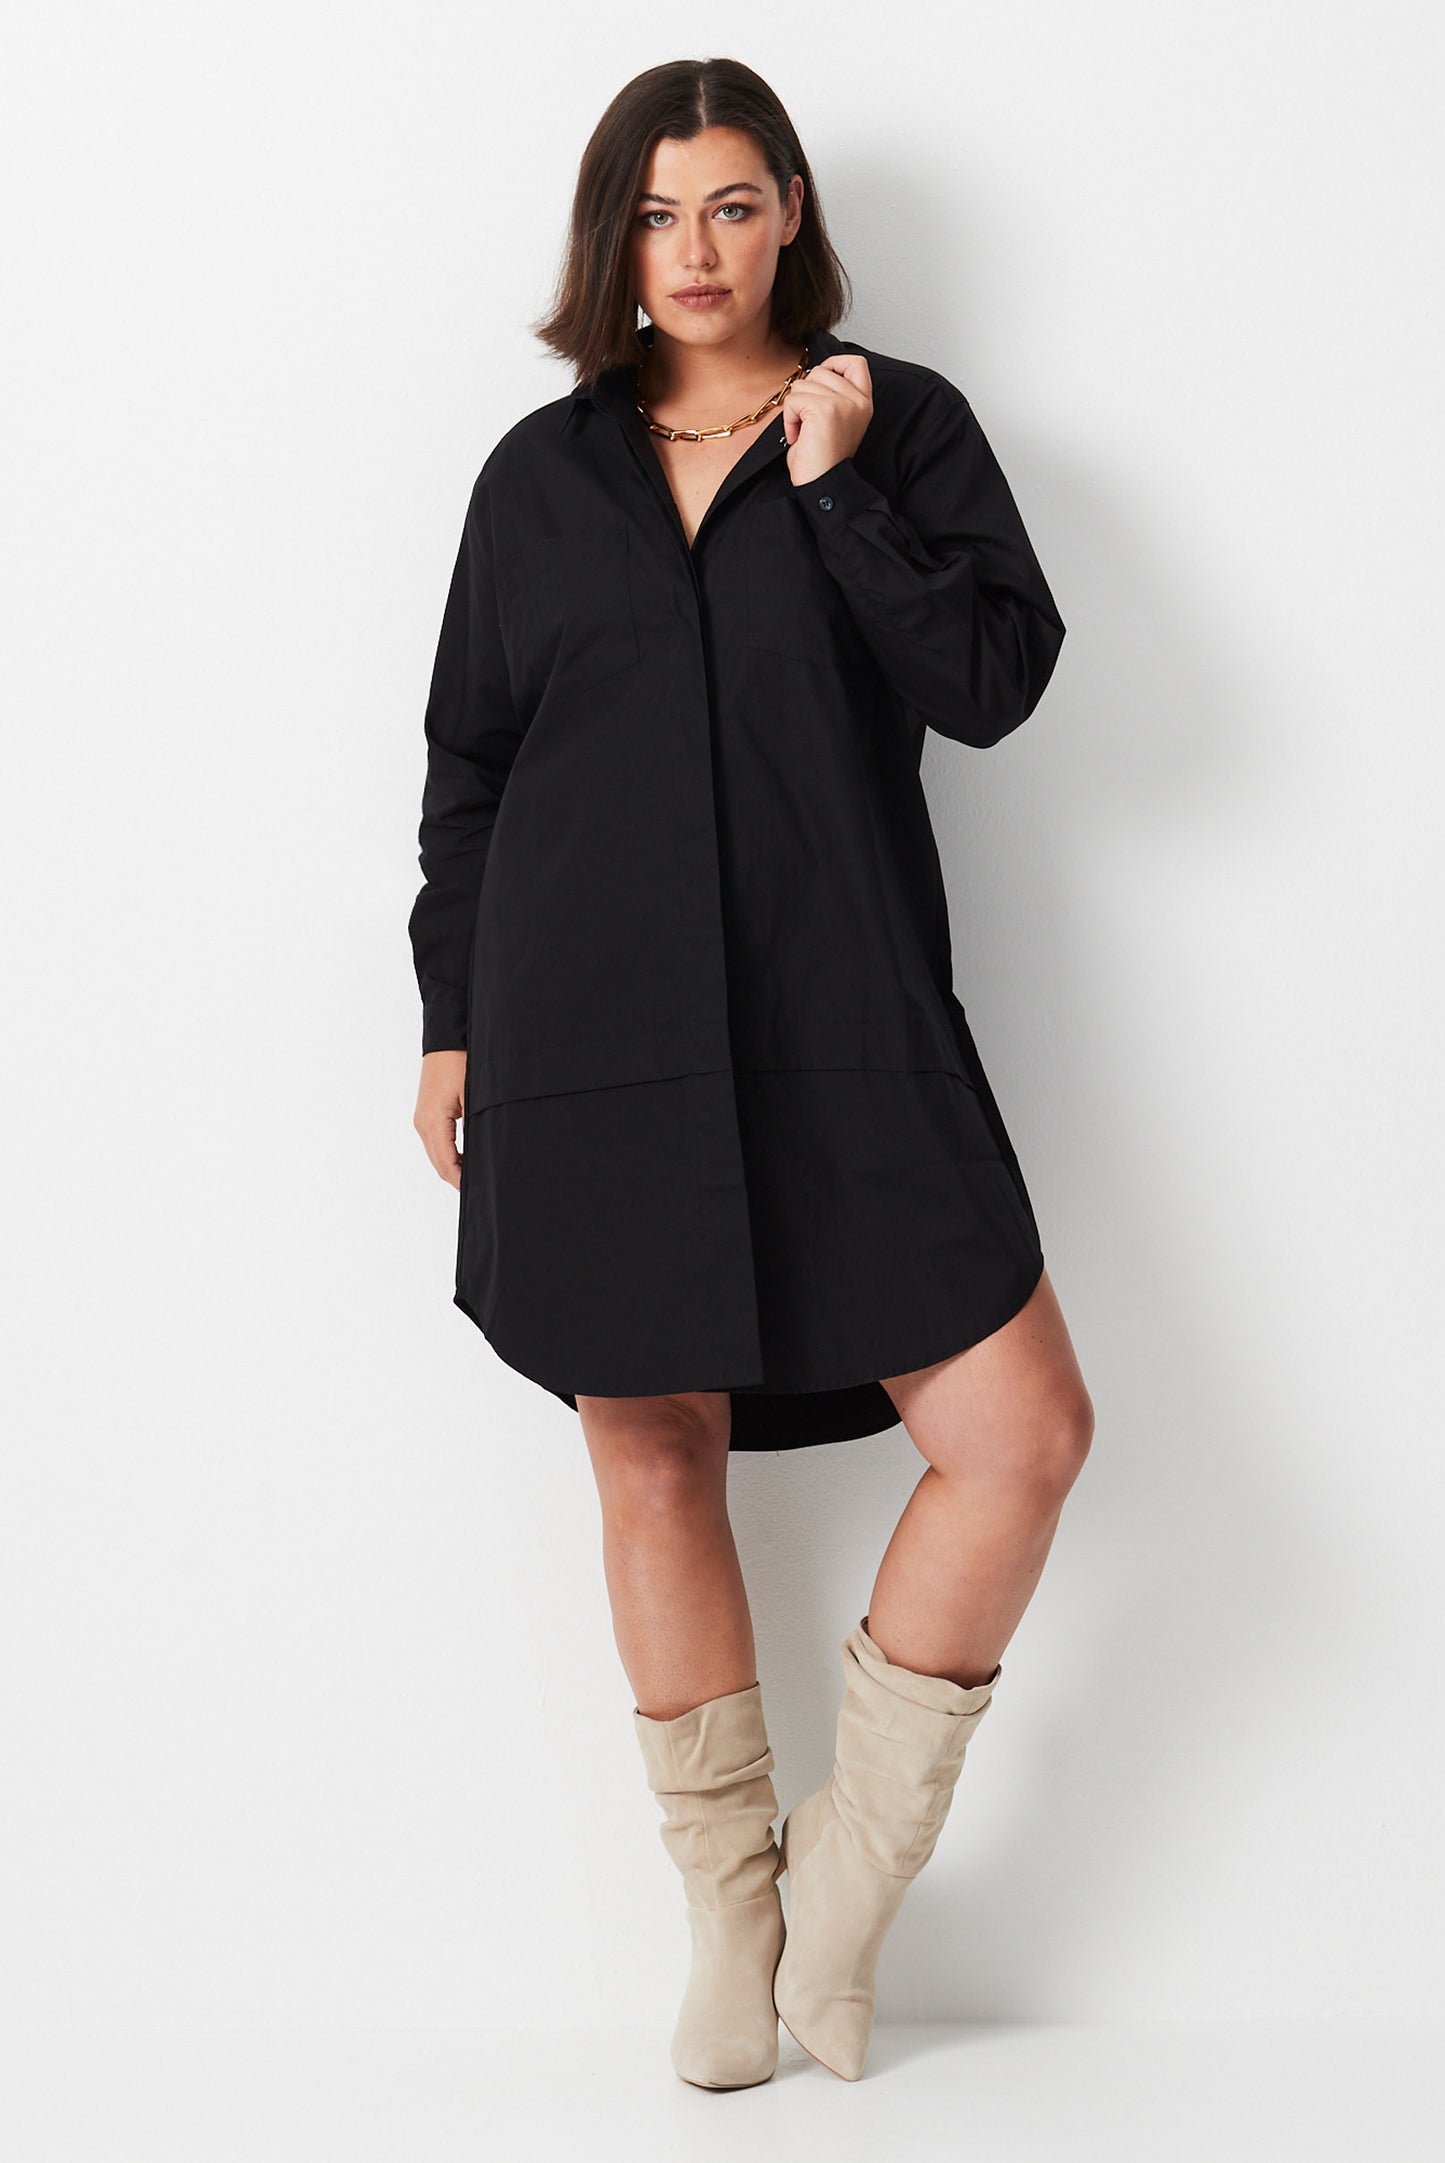 Model wears black plus size shirt dress made from organic cotton